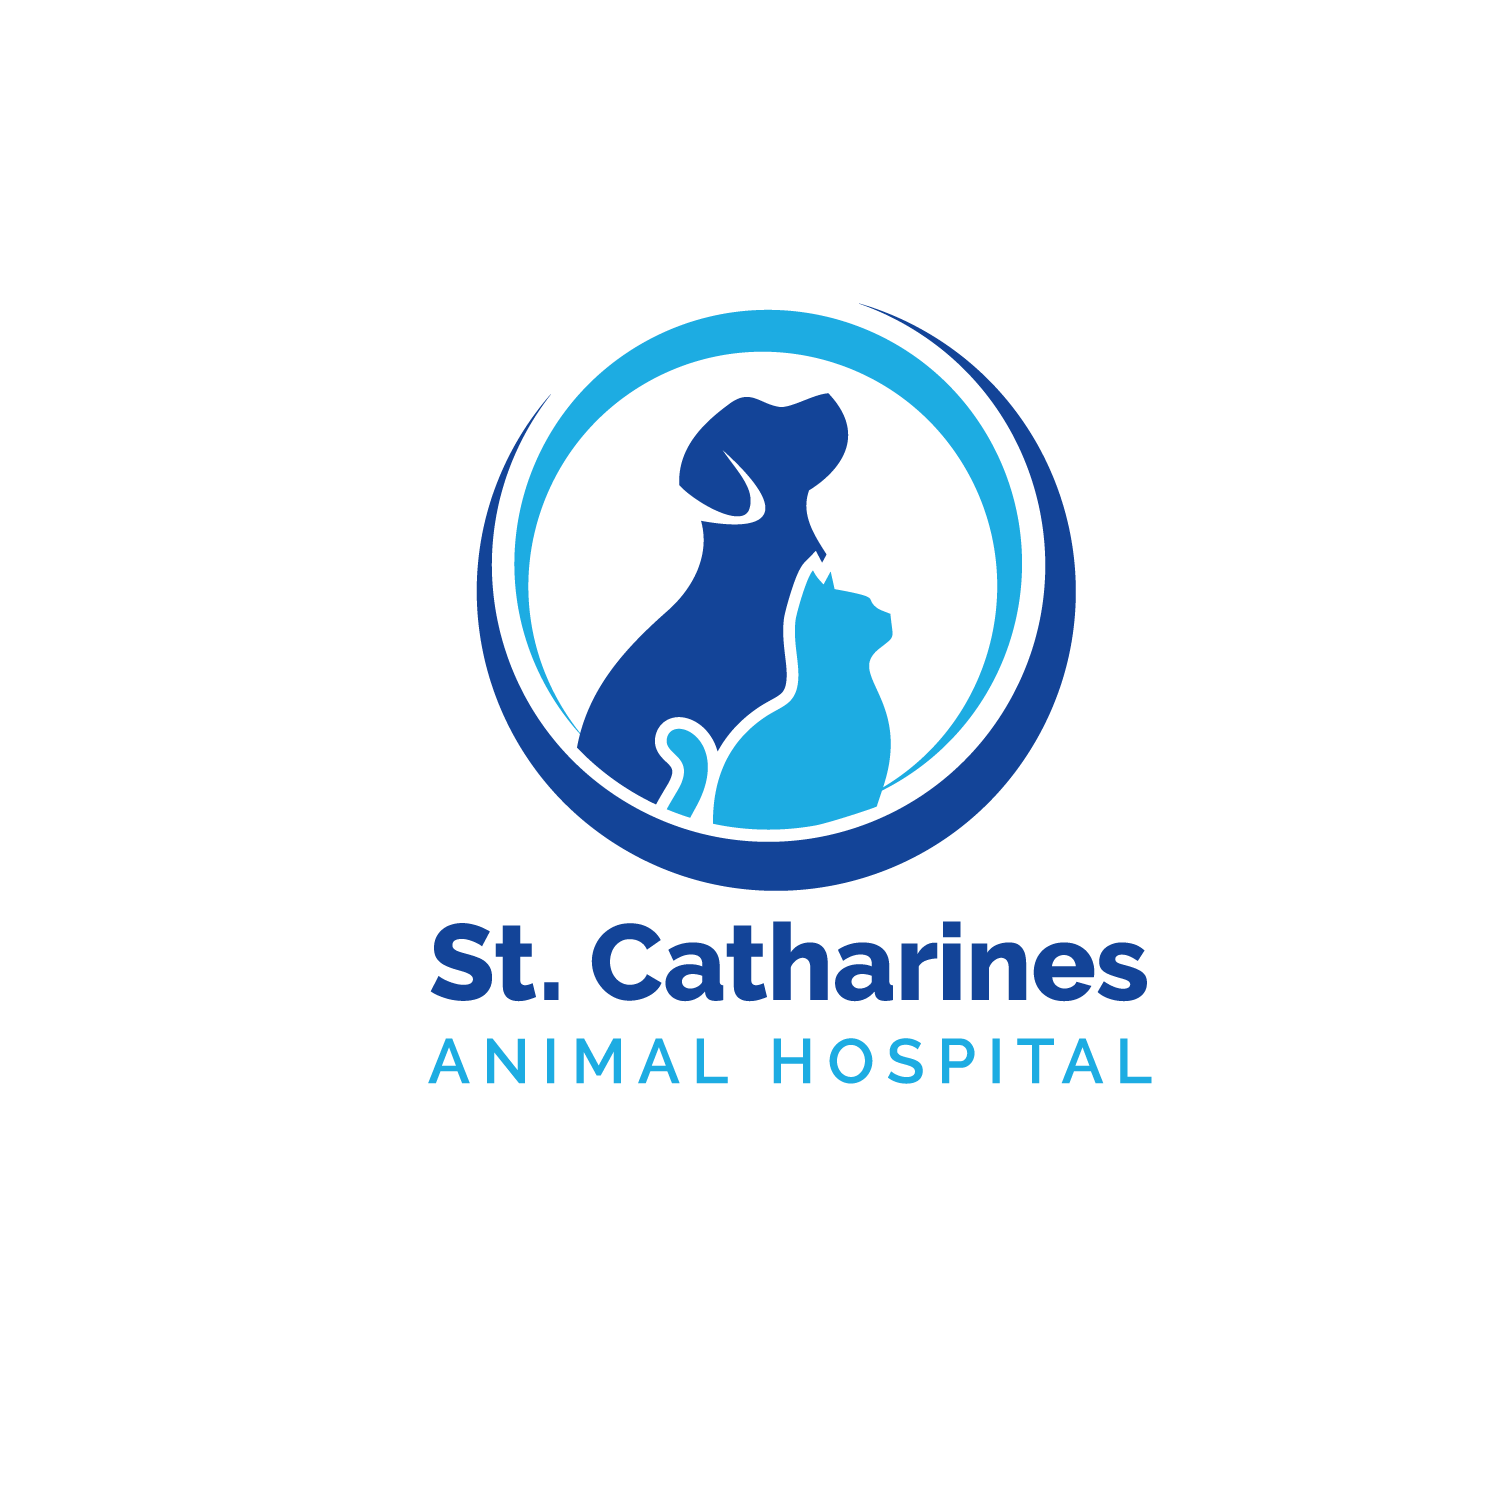 St. Catharines Animal Hospital St. Catharines